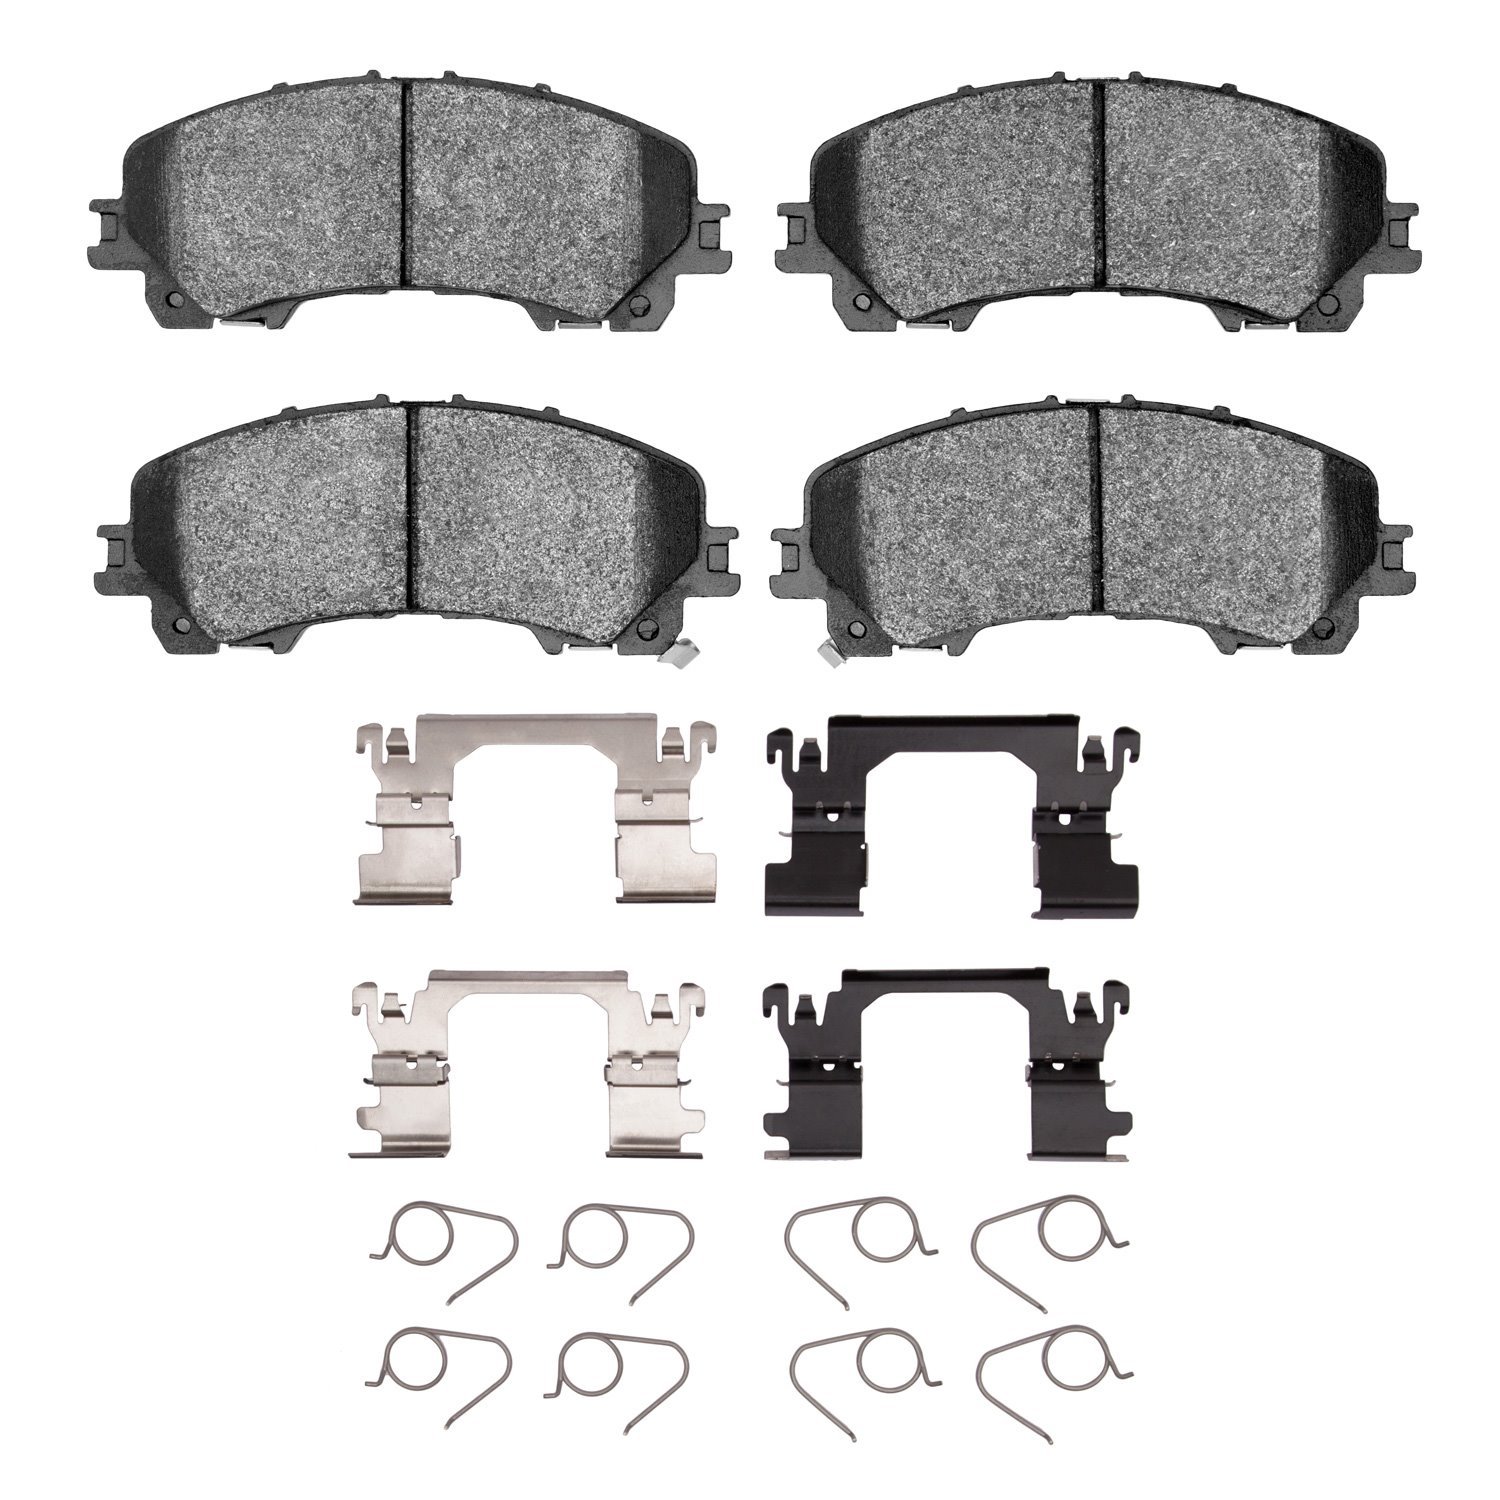 1551-1736-02 5000 Advanced Ceramic Brake Pads & Hardware Kit, Fits Select Infiniti/Nissan, Position: Front